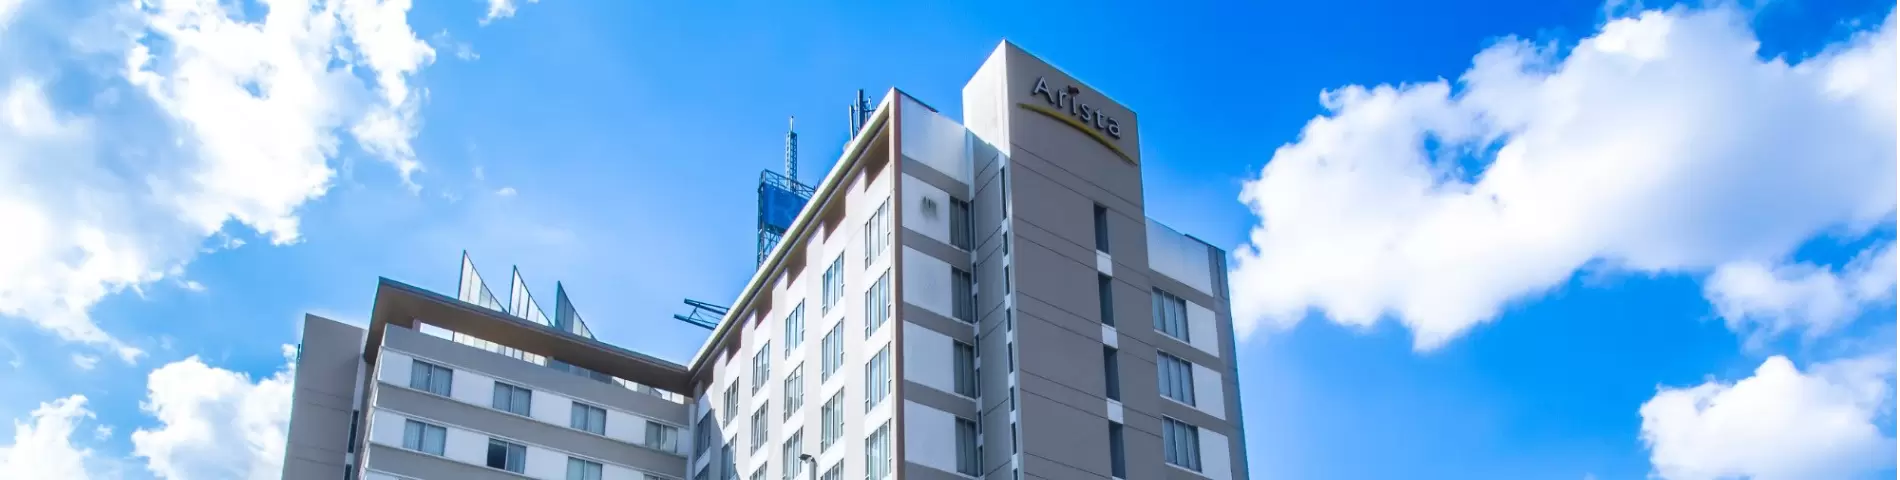 The Arista Hotel